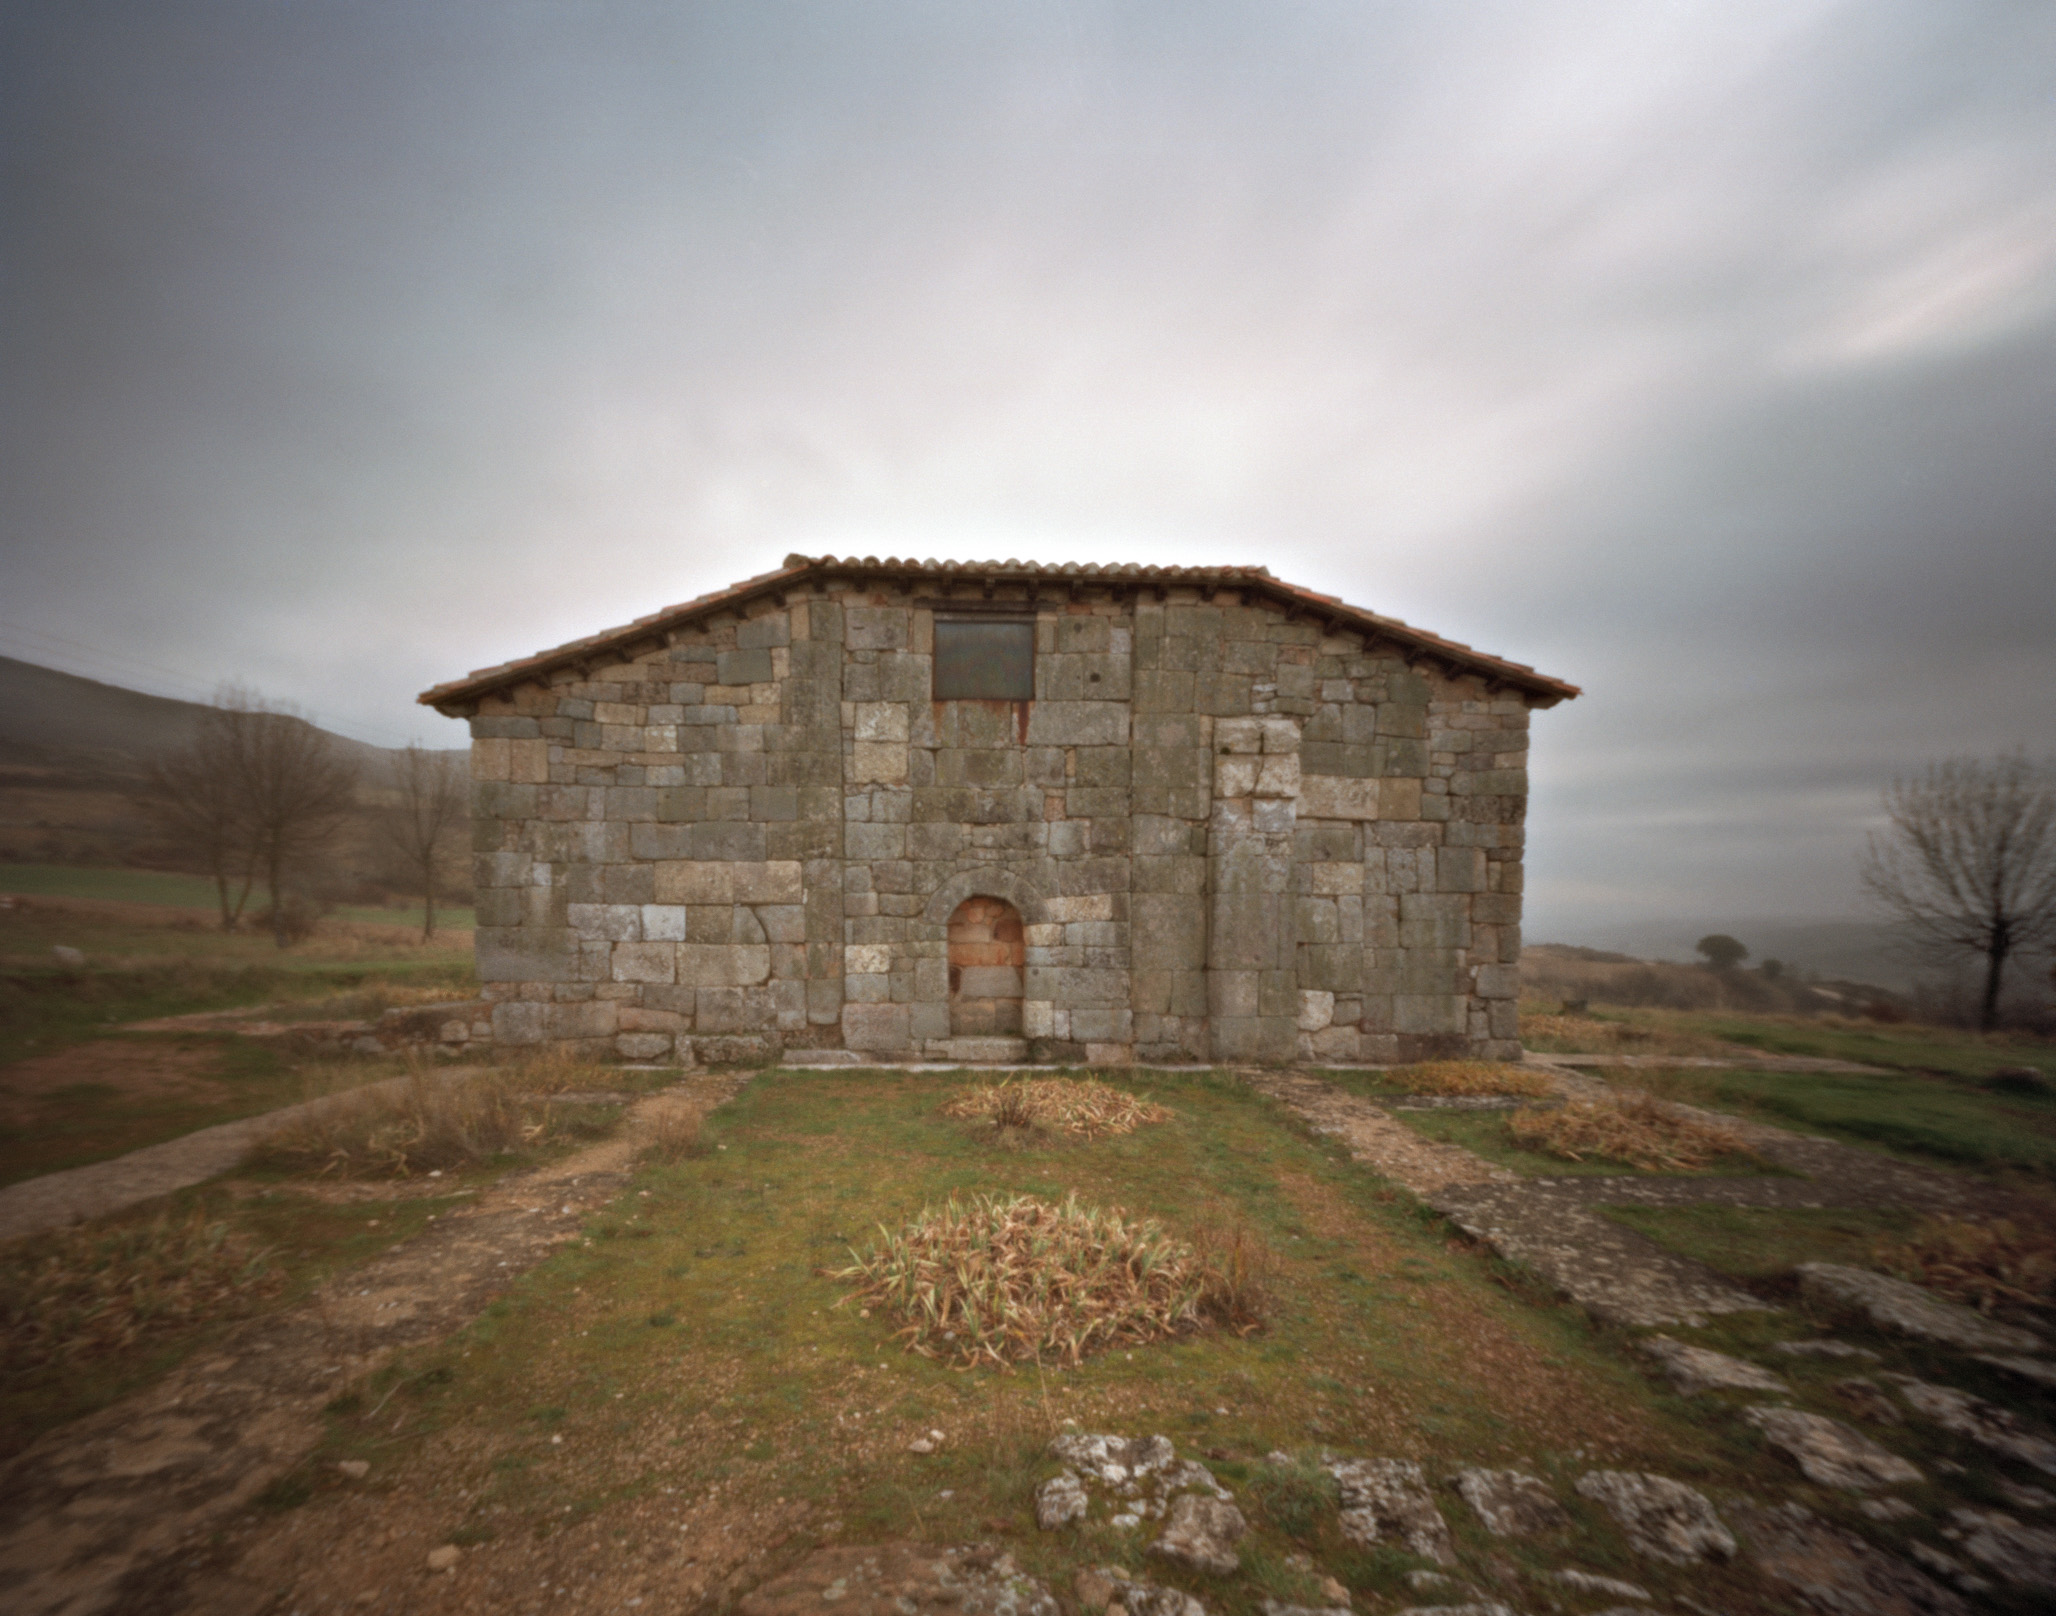 Visigoth hermitage in Spain